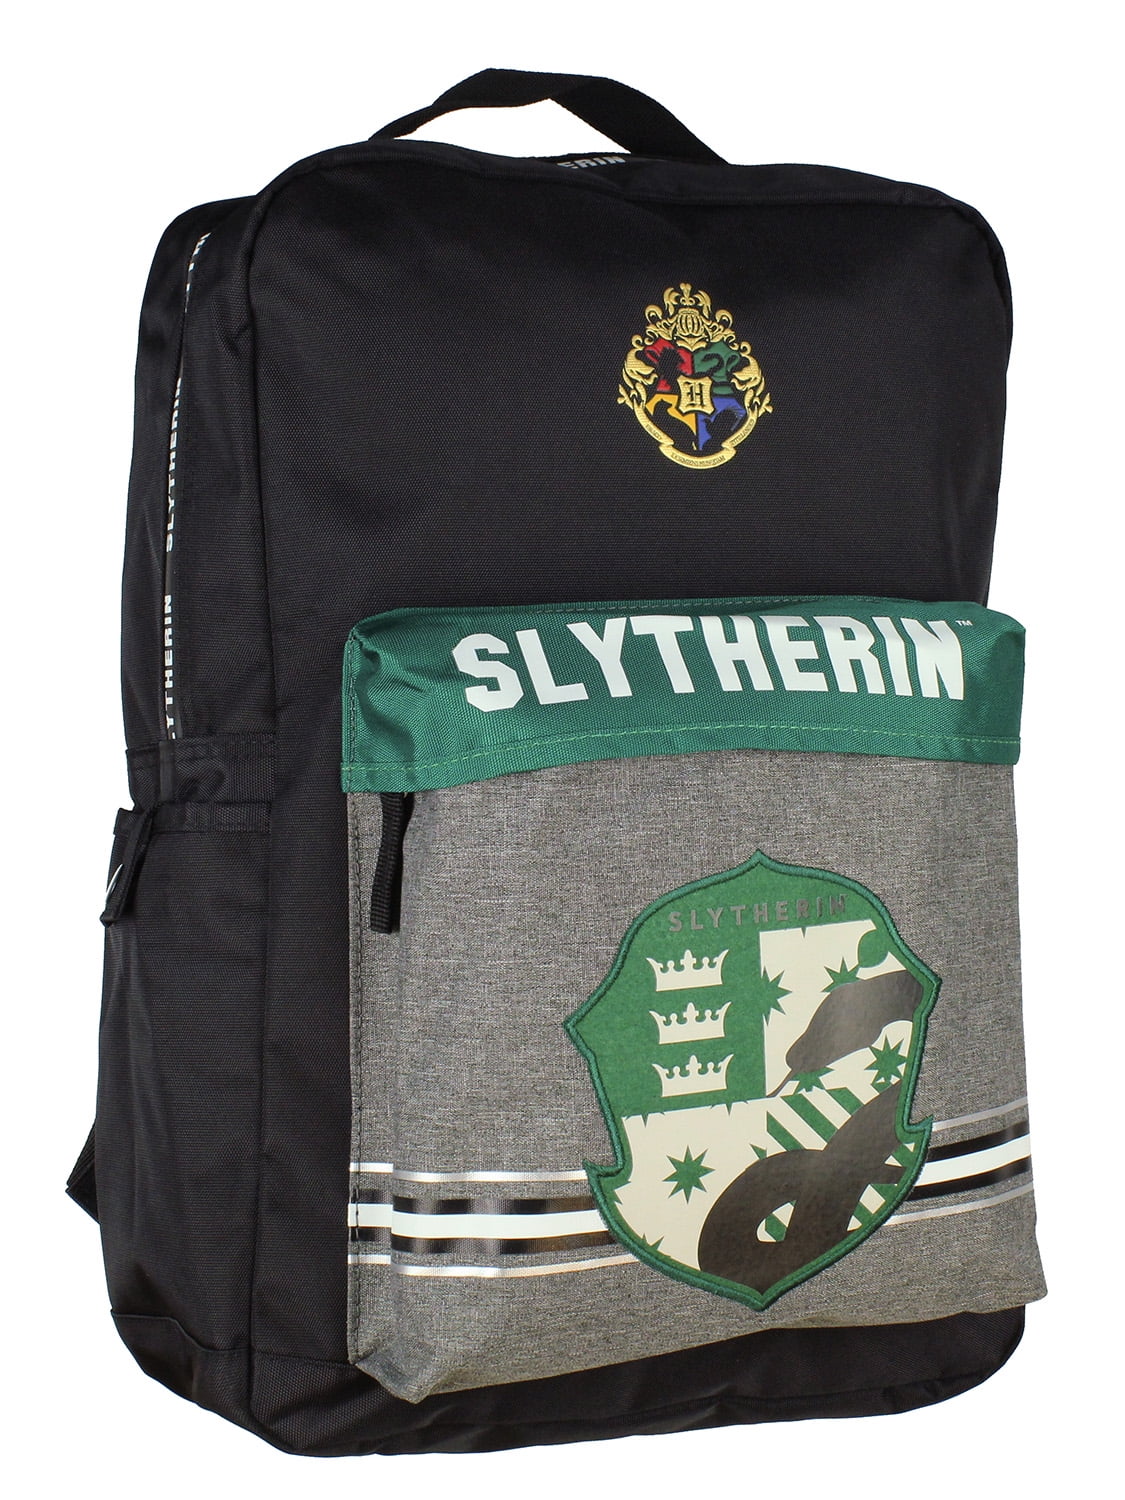 Harry Potter Hogwart Backpack Kids Student Bookbag Laptop Bag Travel Computer Bag for Boys Girls Teens Kids Camping Hiking